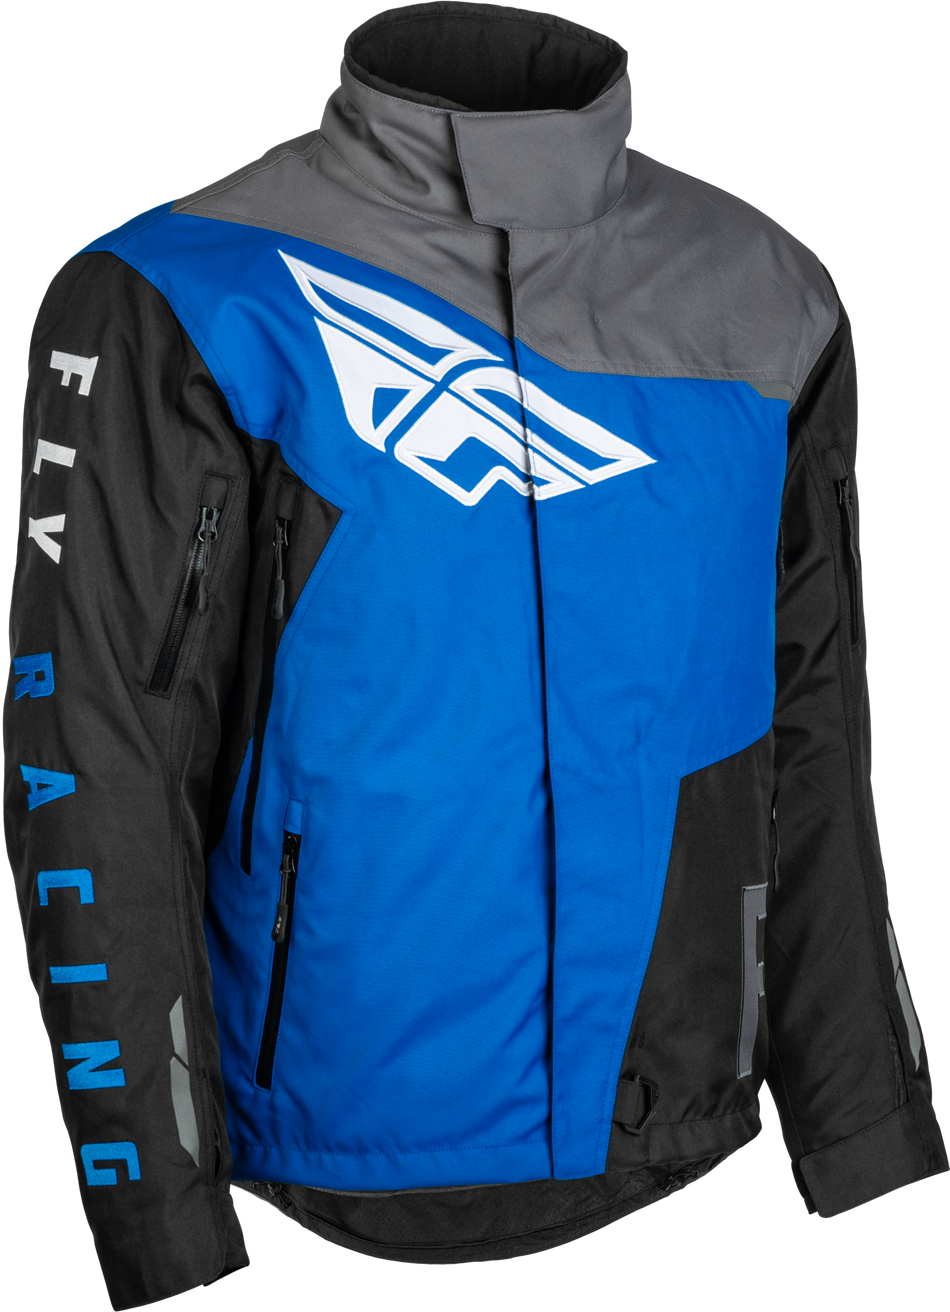 FLY RACING Snx Pro Jacket Black/Grey/Blue 4x 470-41164X